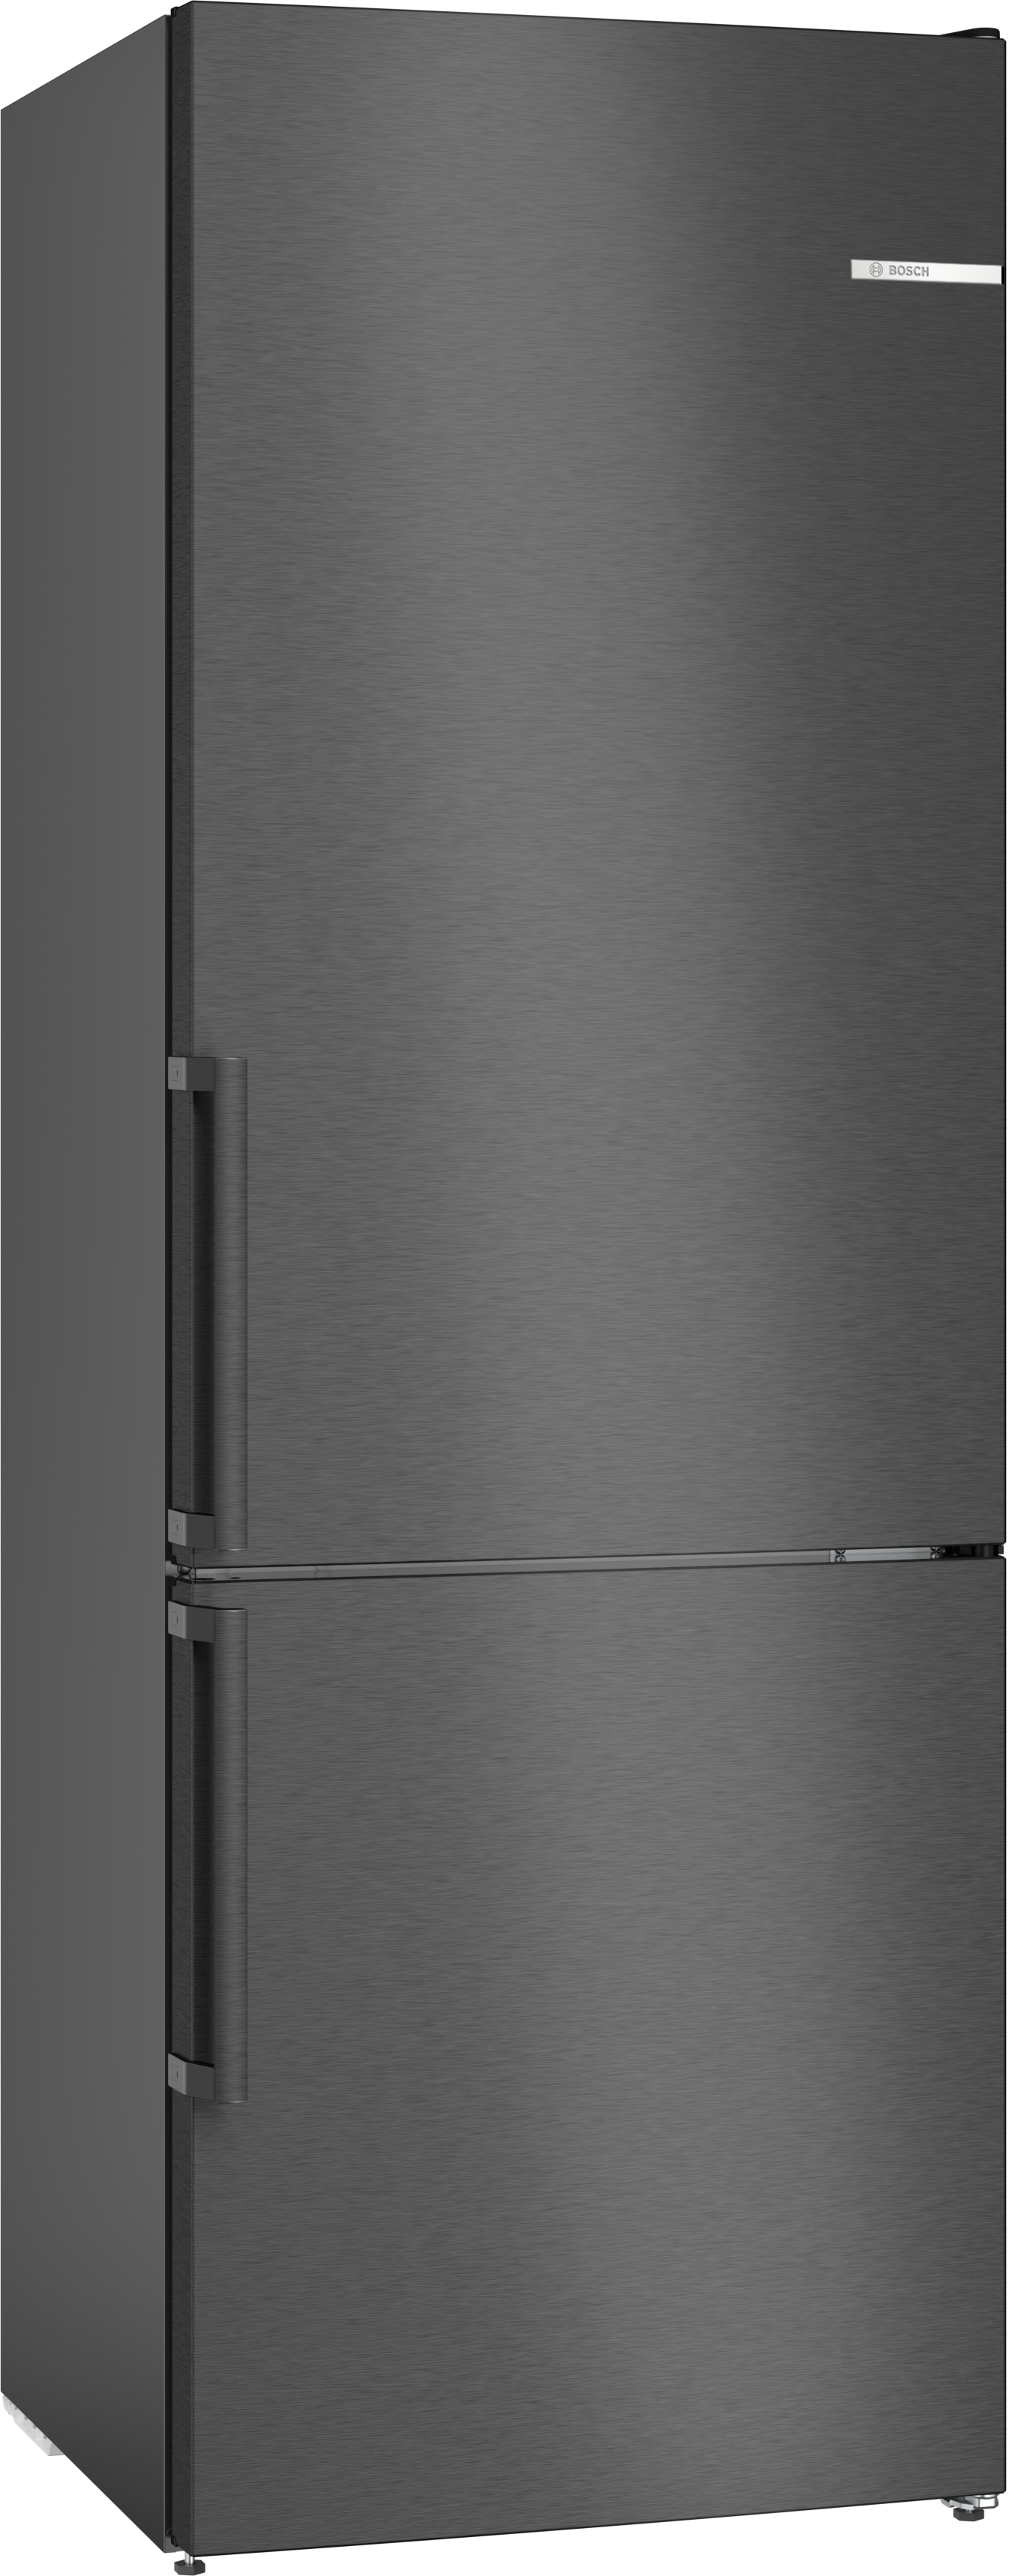 Series 4, free-standing fridge-freezer with freezer at bottom, 203 x 70 cm, Black stainless steel, KGN49VXDT